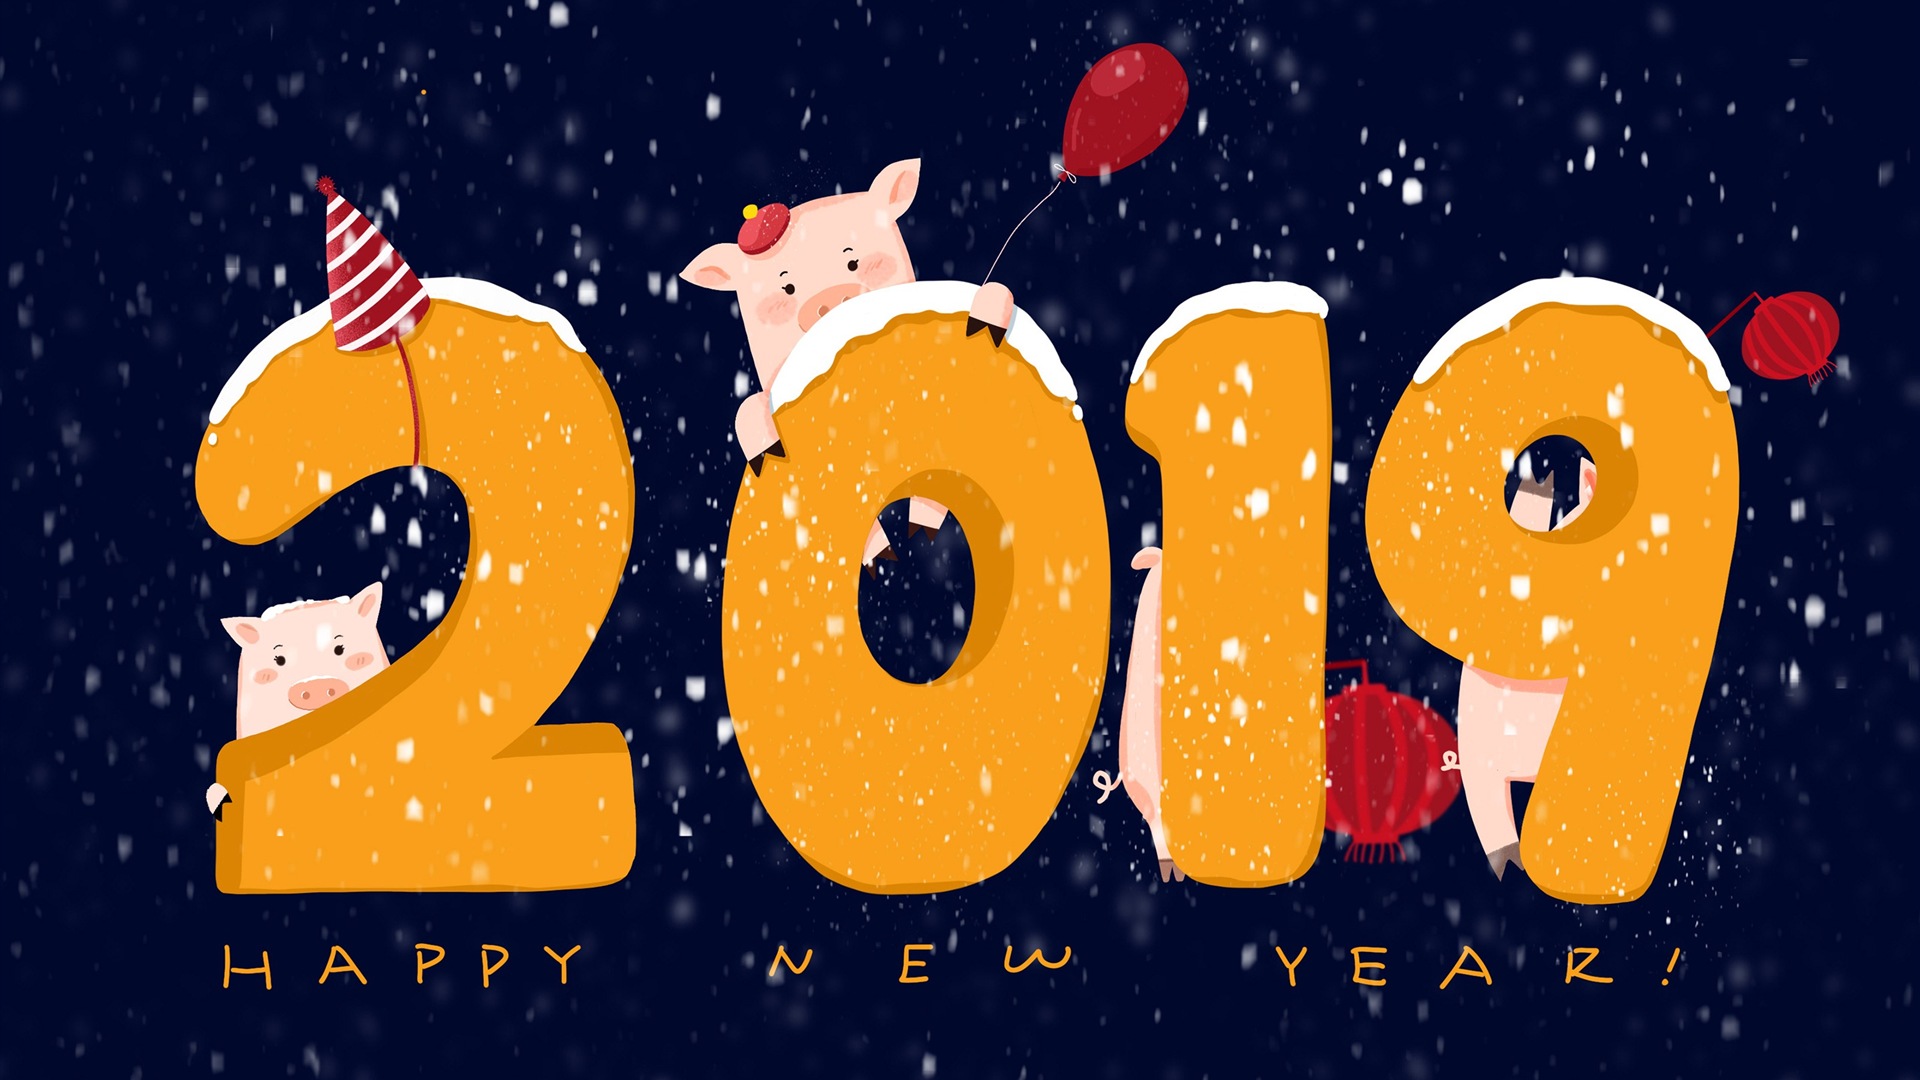 Frohes neues Jahr 2019 HD Wallpaper #18 - 1920x1080